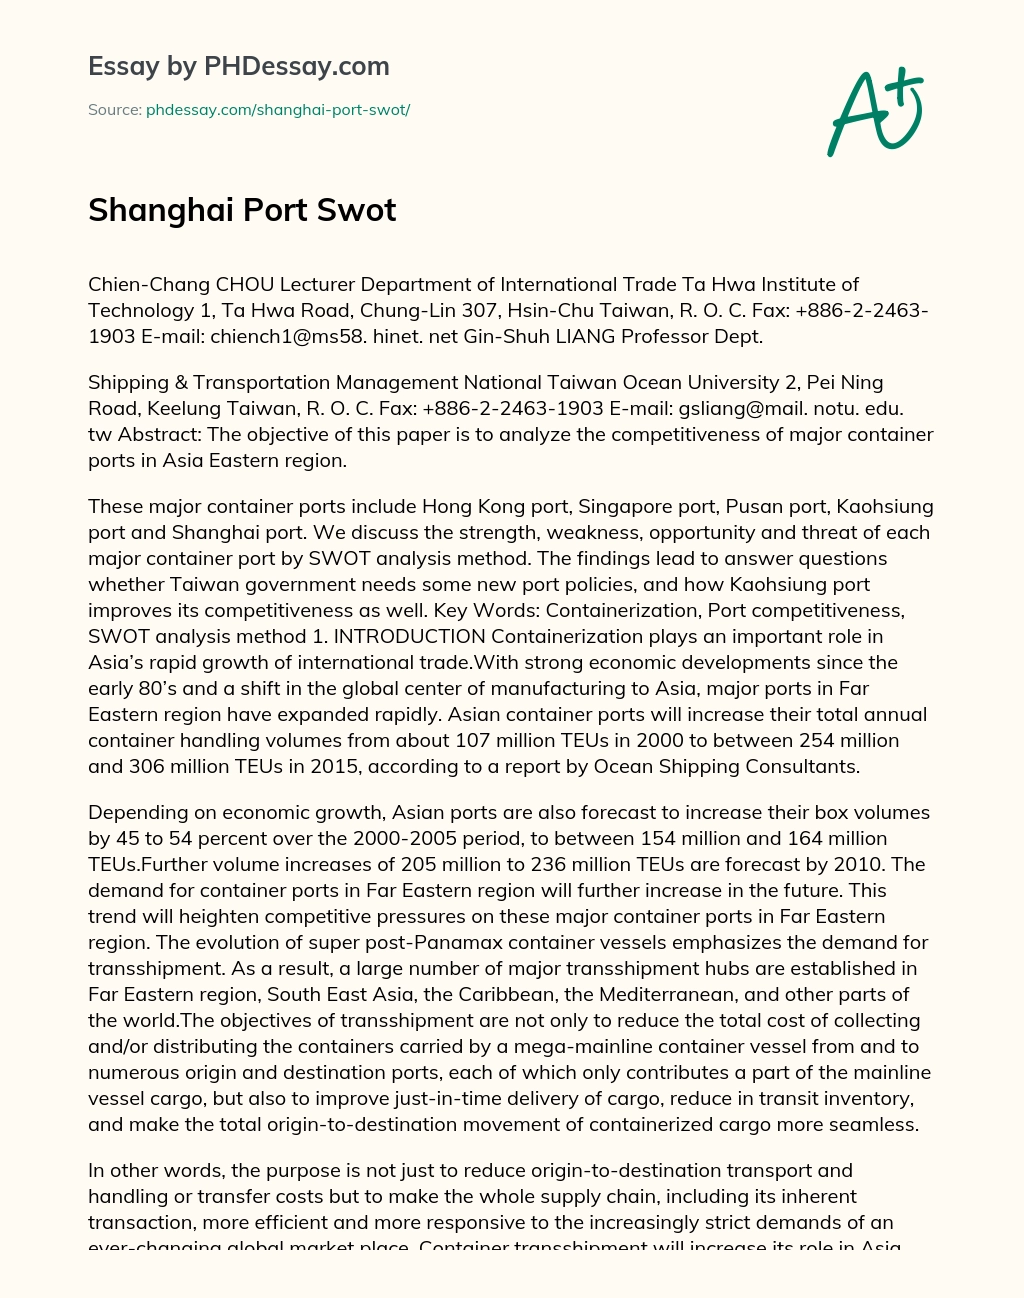 Shanghai Port Swot essay